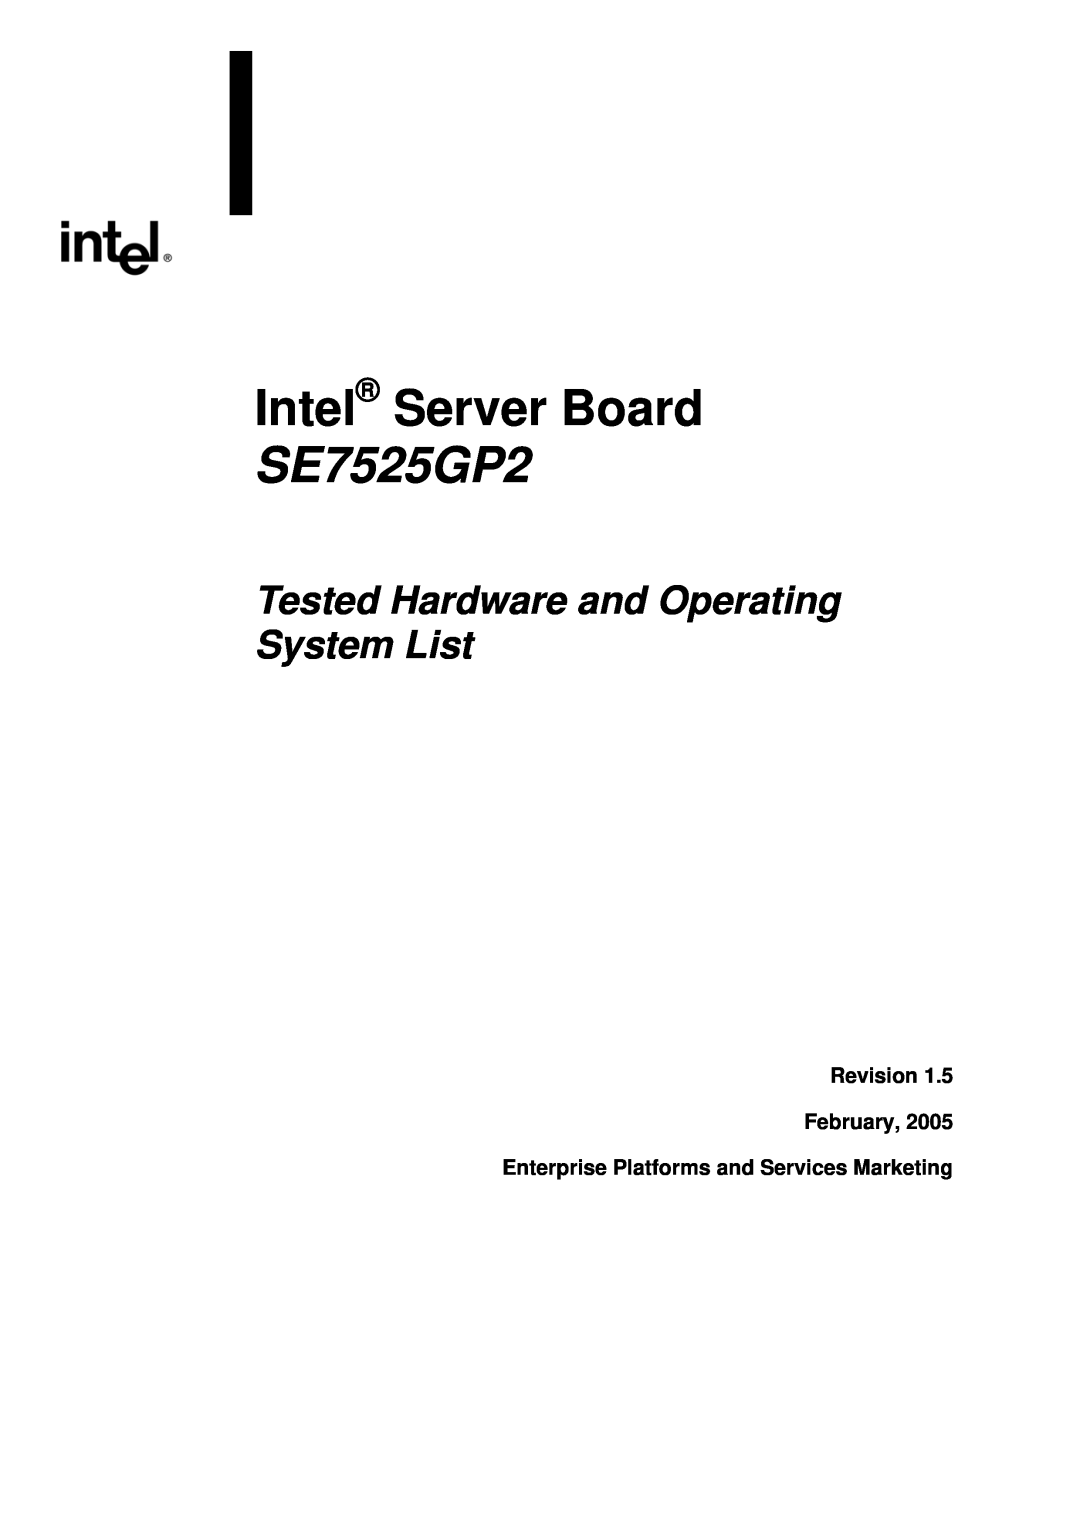 Intel SE7525GP2 manual Revision February, Enterprise Platforms and Services Marketing, Intel Server Board 